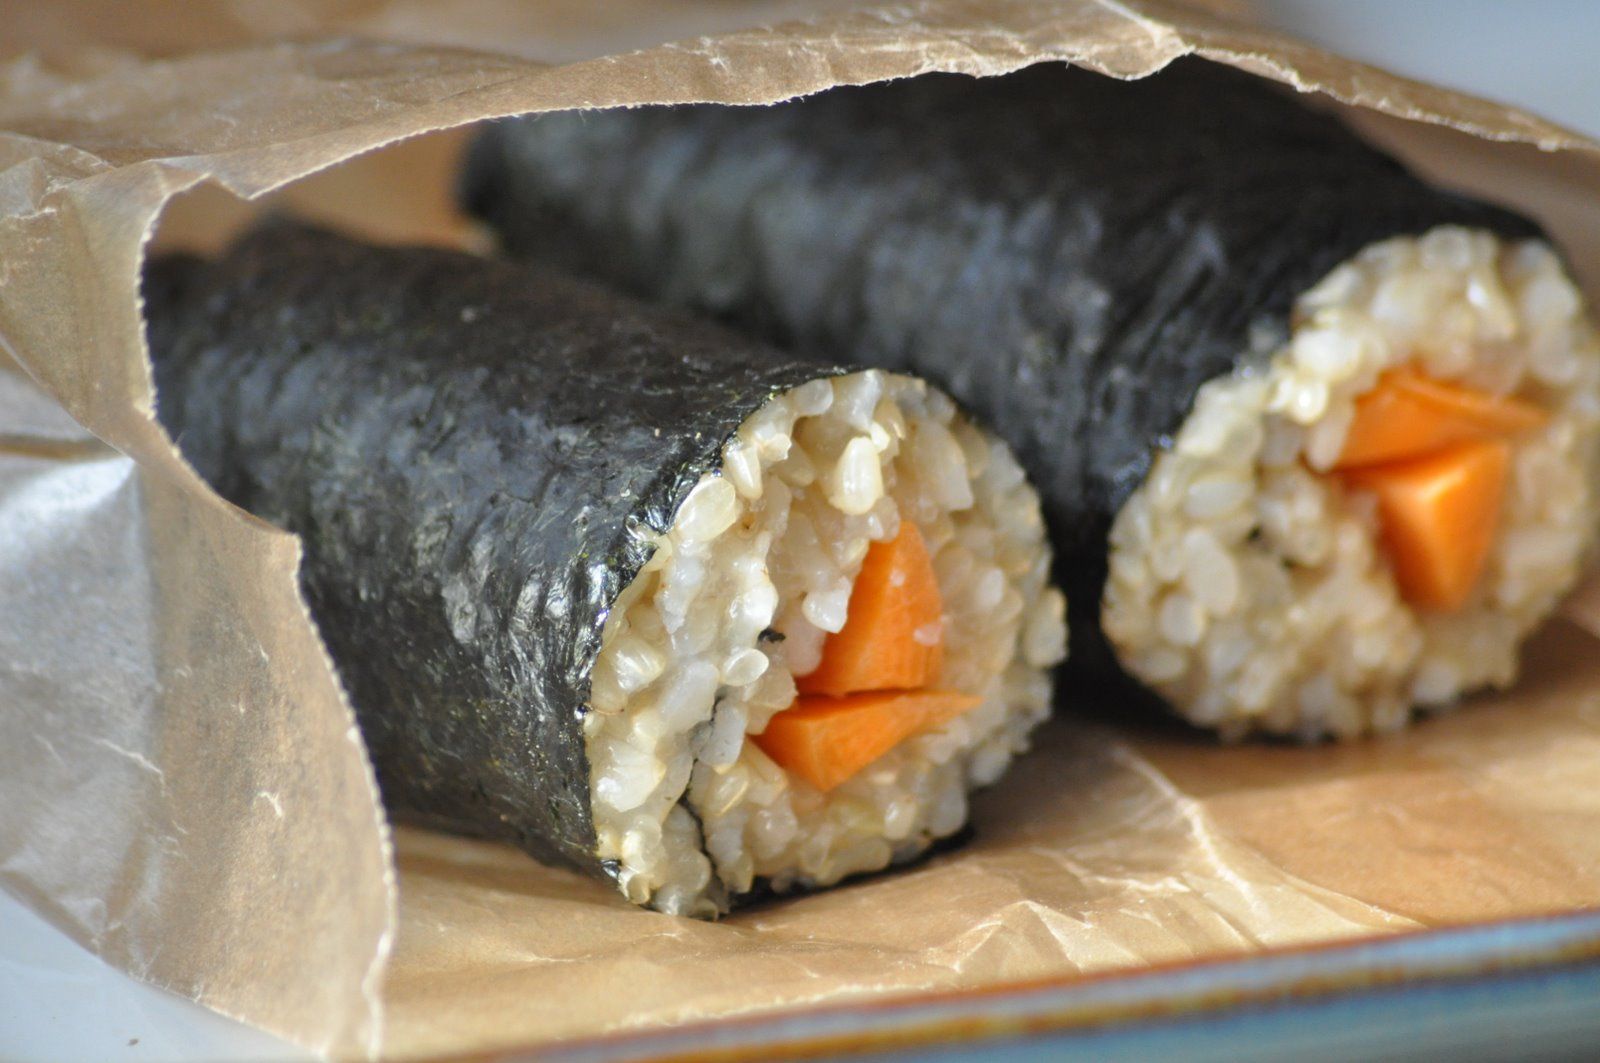 nori rolls - packing lunch